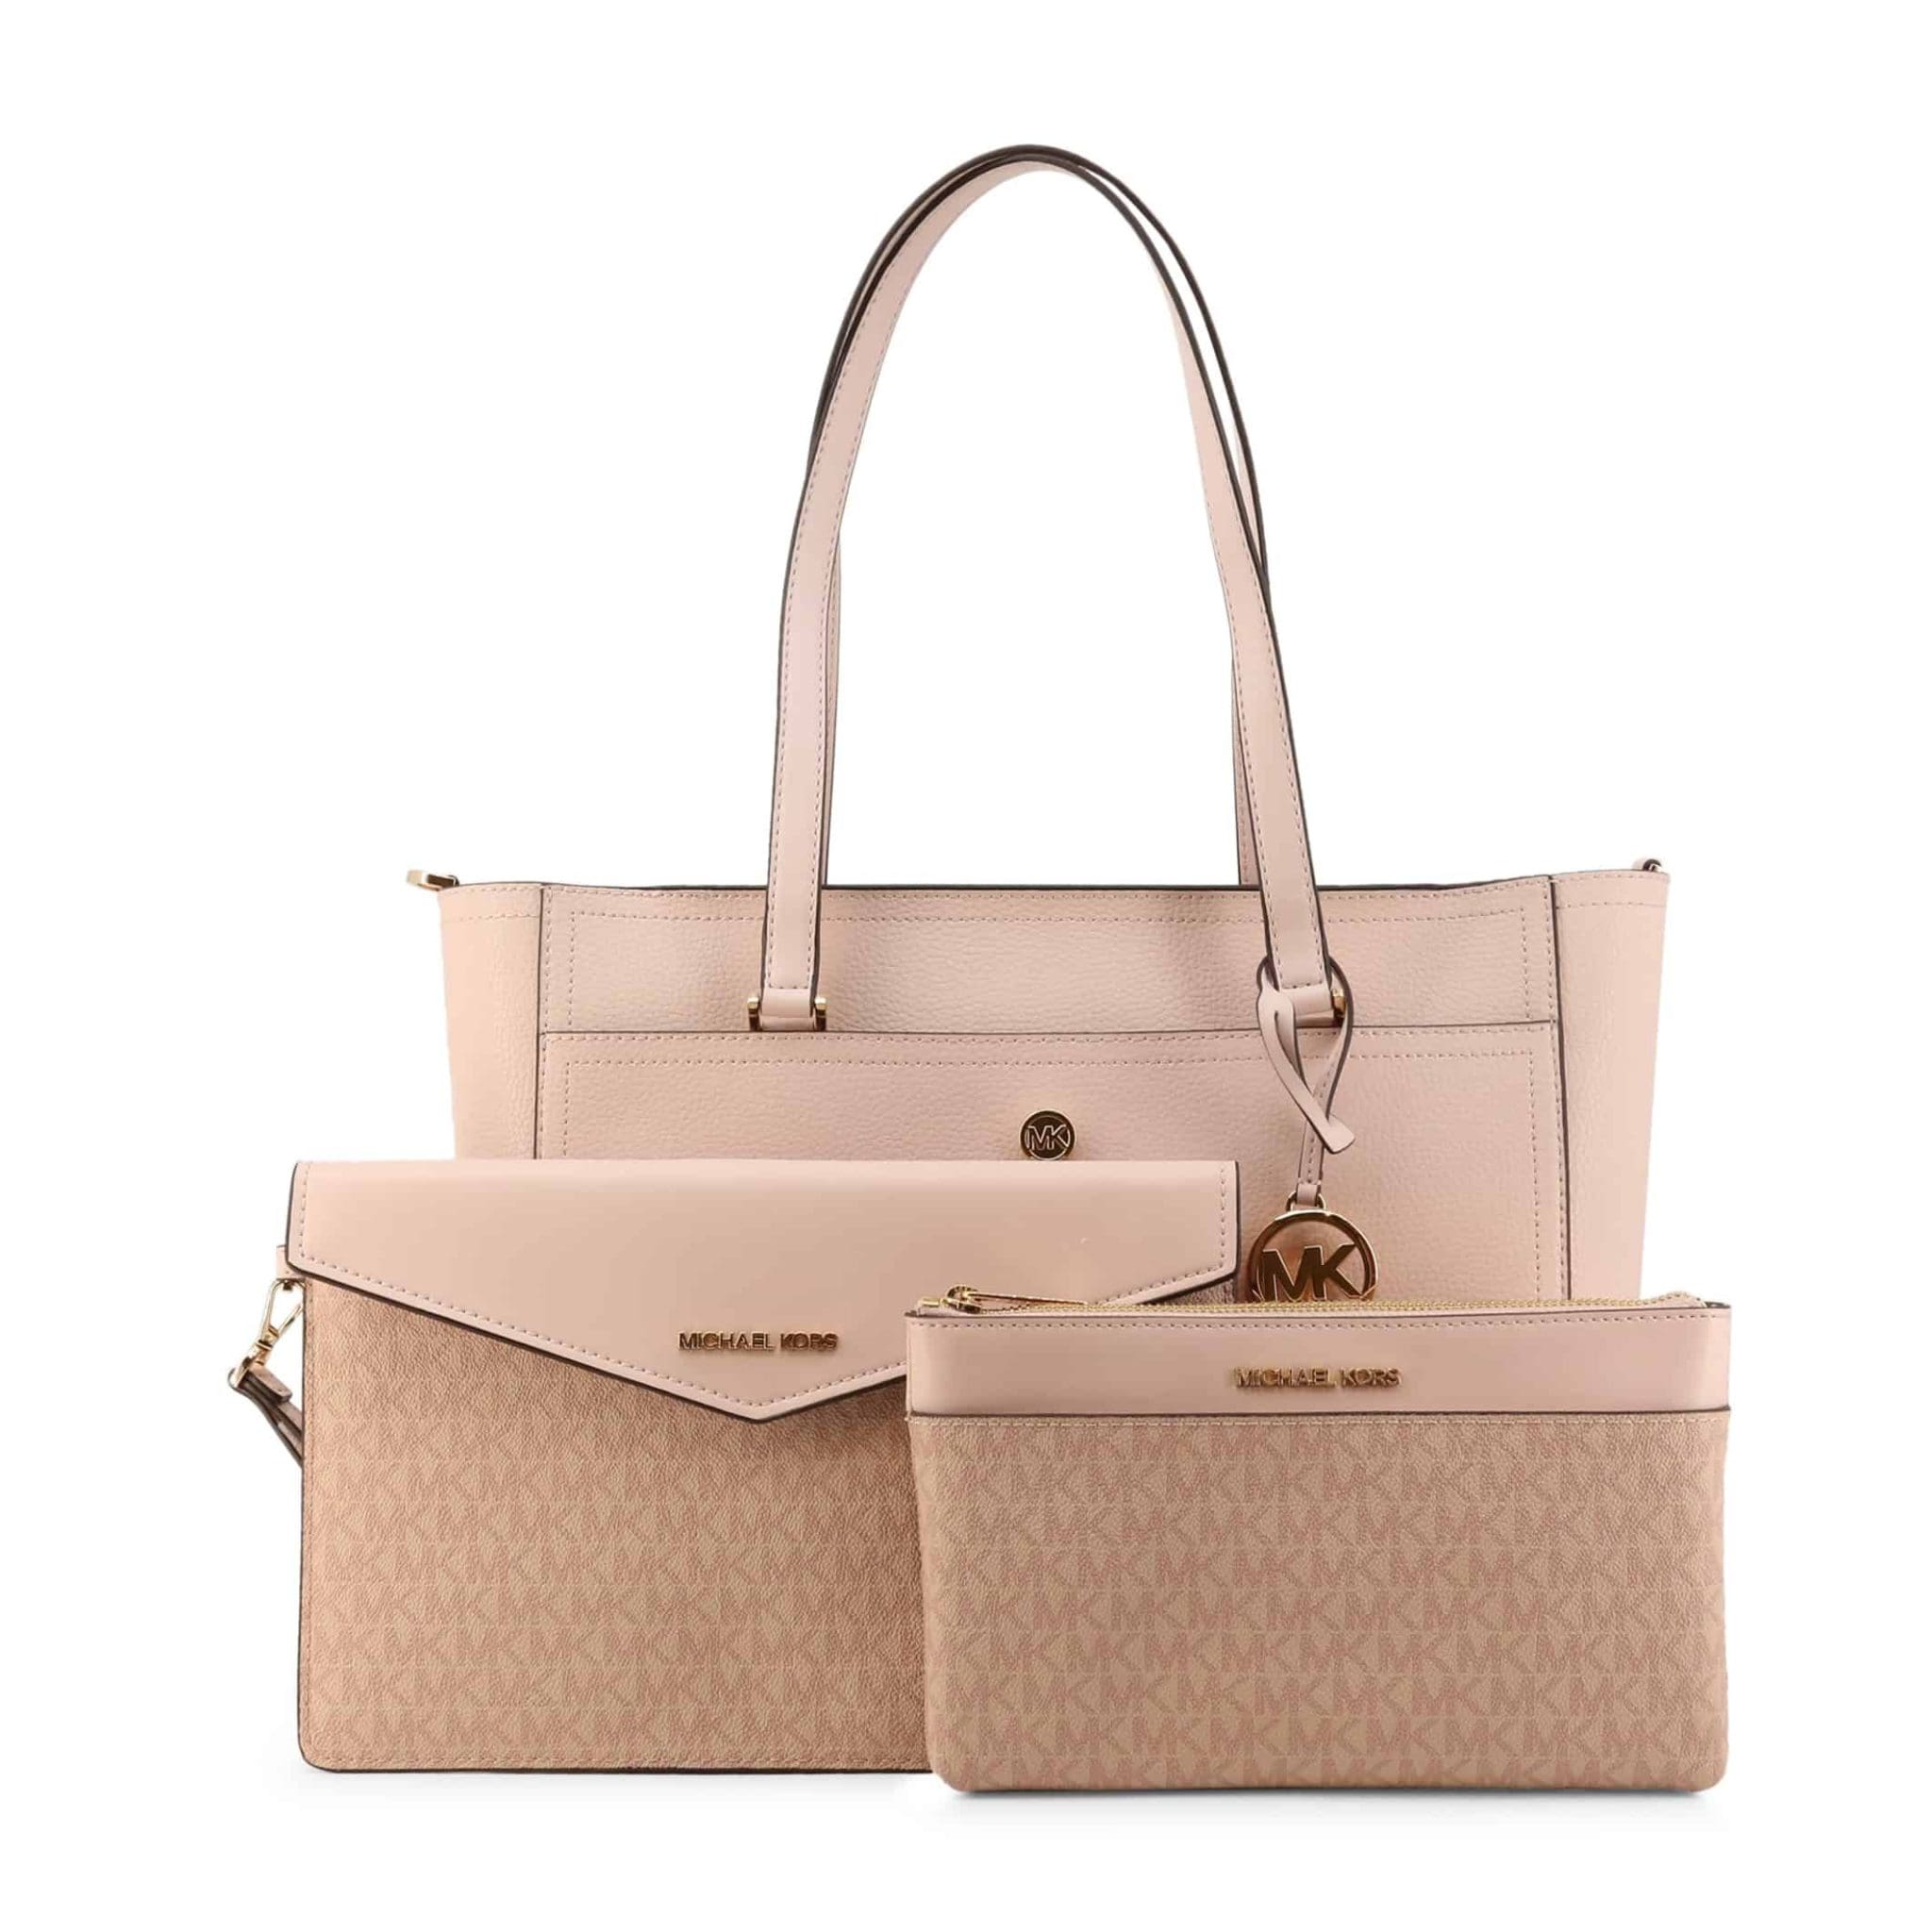 Michael Kors Pink Shopping Bag - Maisie_35T1G5Mt7T 1